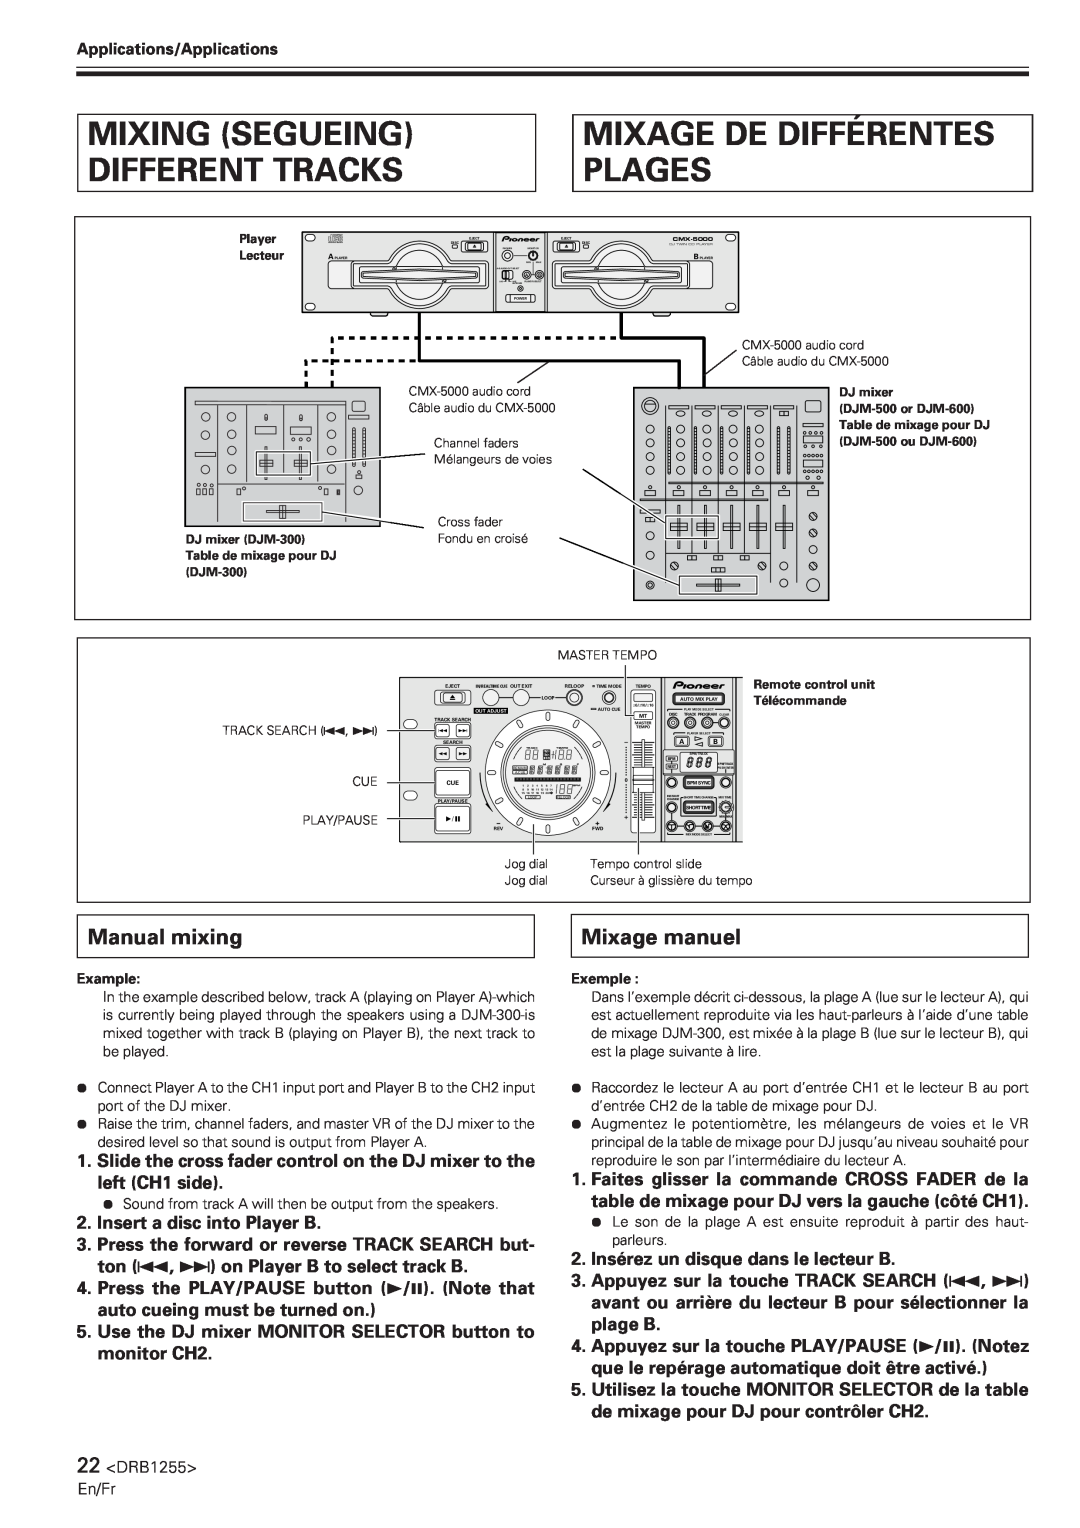 Pioneer CMX-5000 manual Mixing Segueing Different Tracks, Mixage De Différentes Plages, Manual mixing, Mixage manuel 